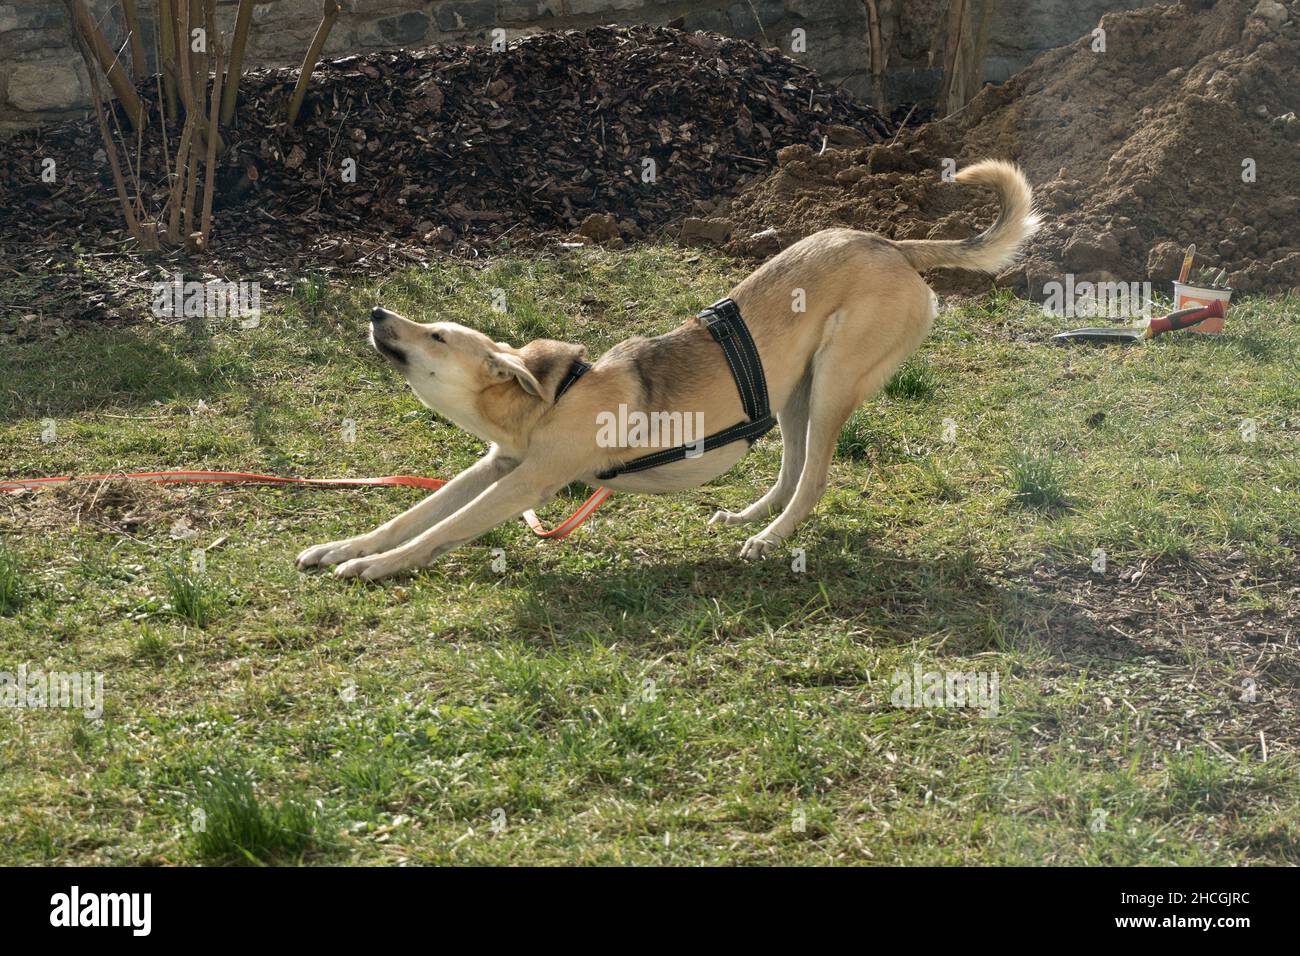 Hundemorgengymnastik - Morgengymnastik für Hunde Stock Photo